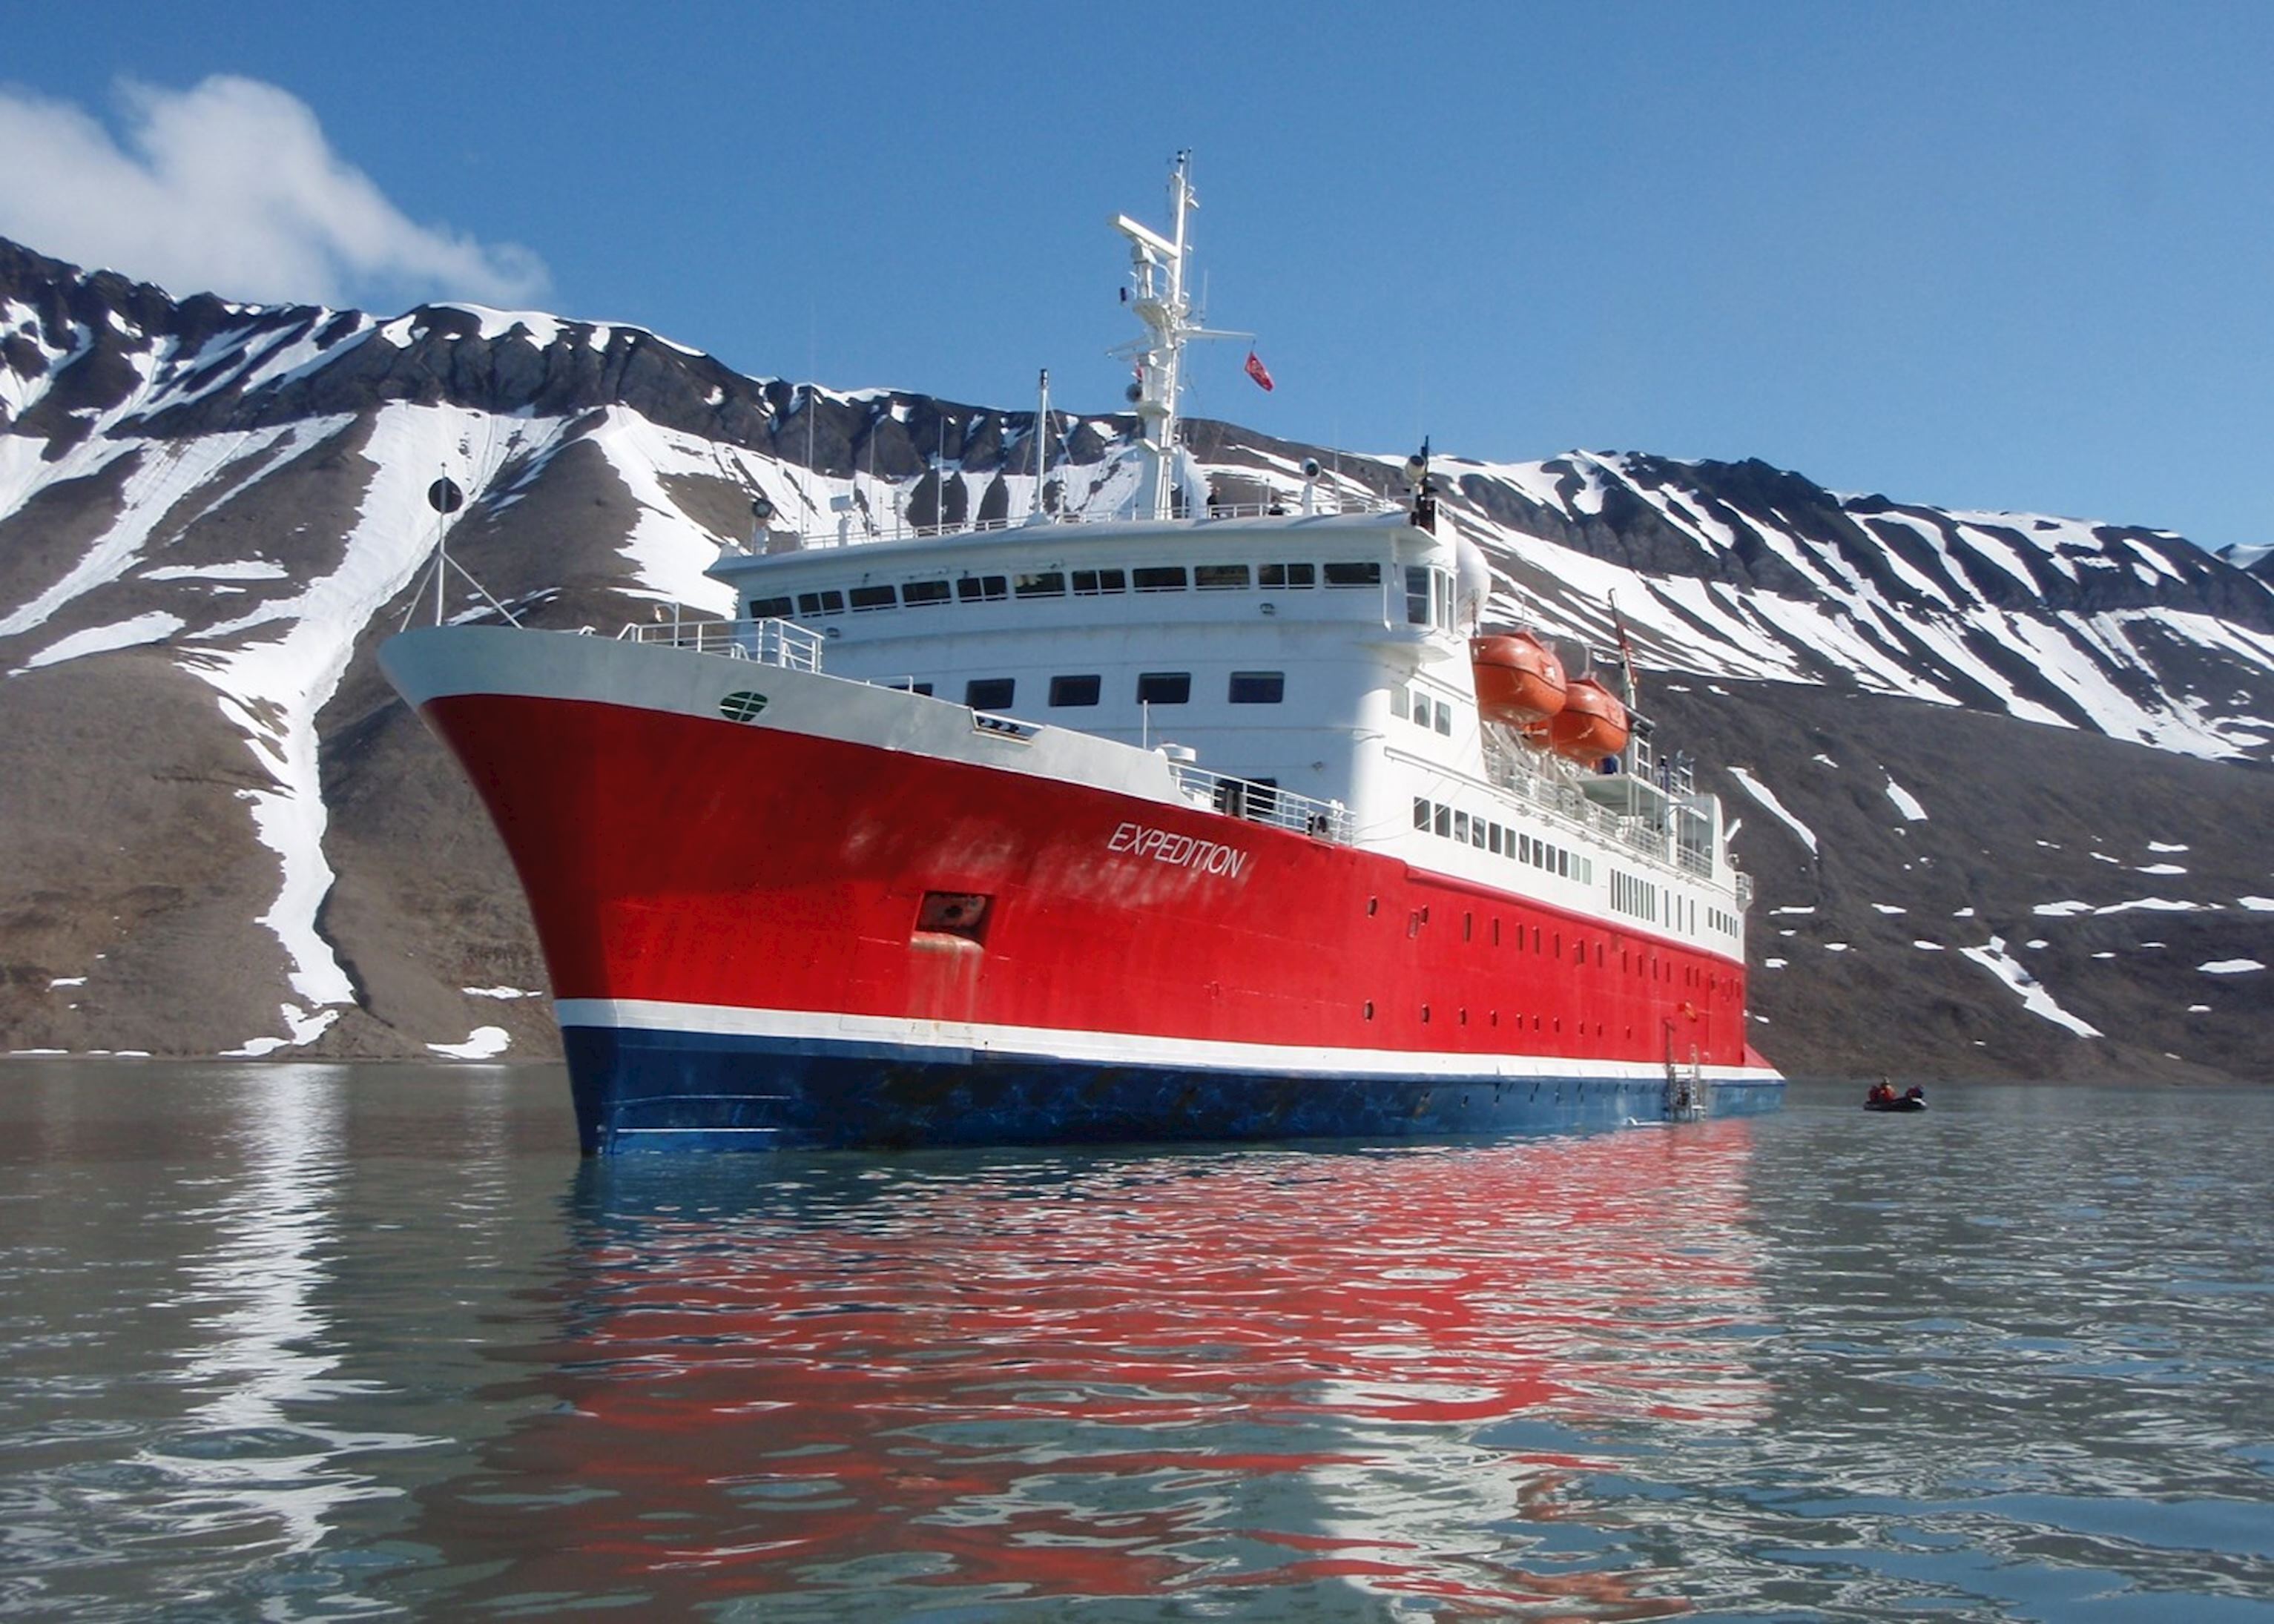 antarctic cruise companies